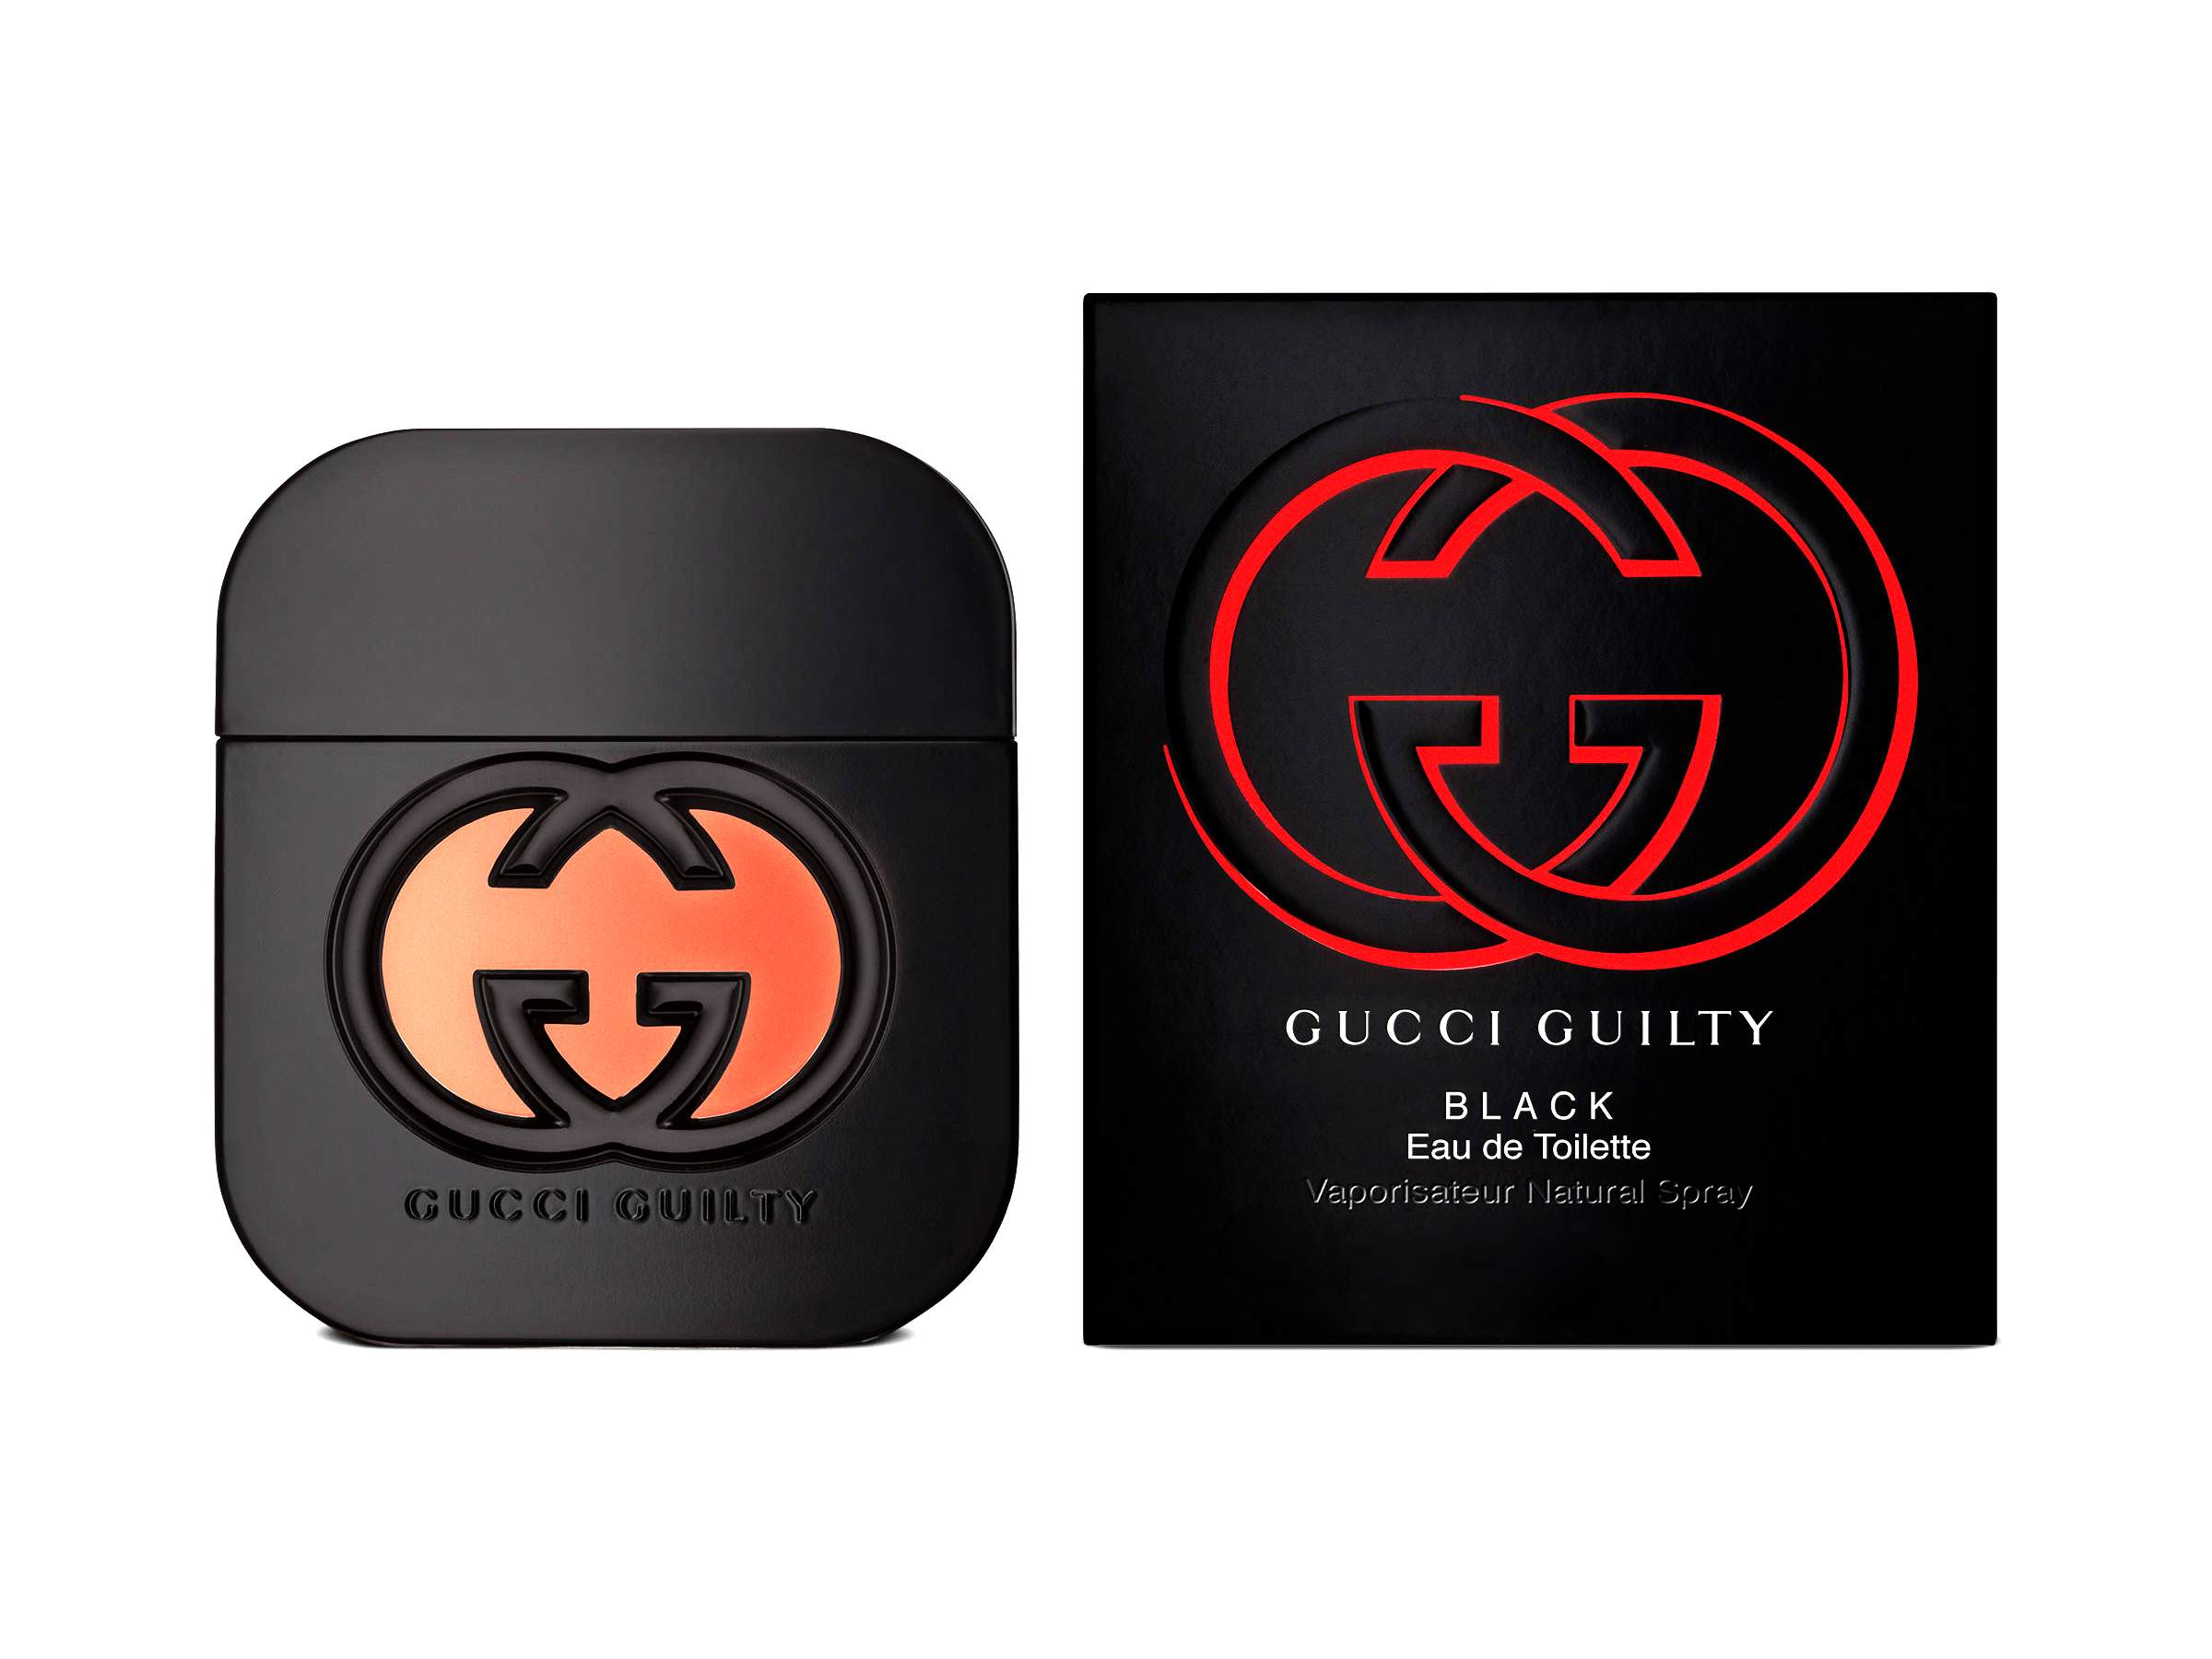 gucci guilty black 30ml